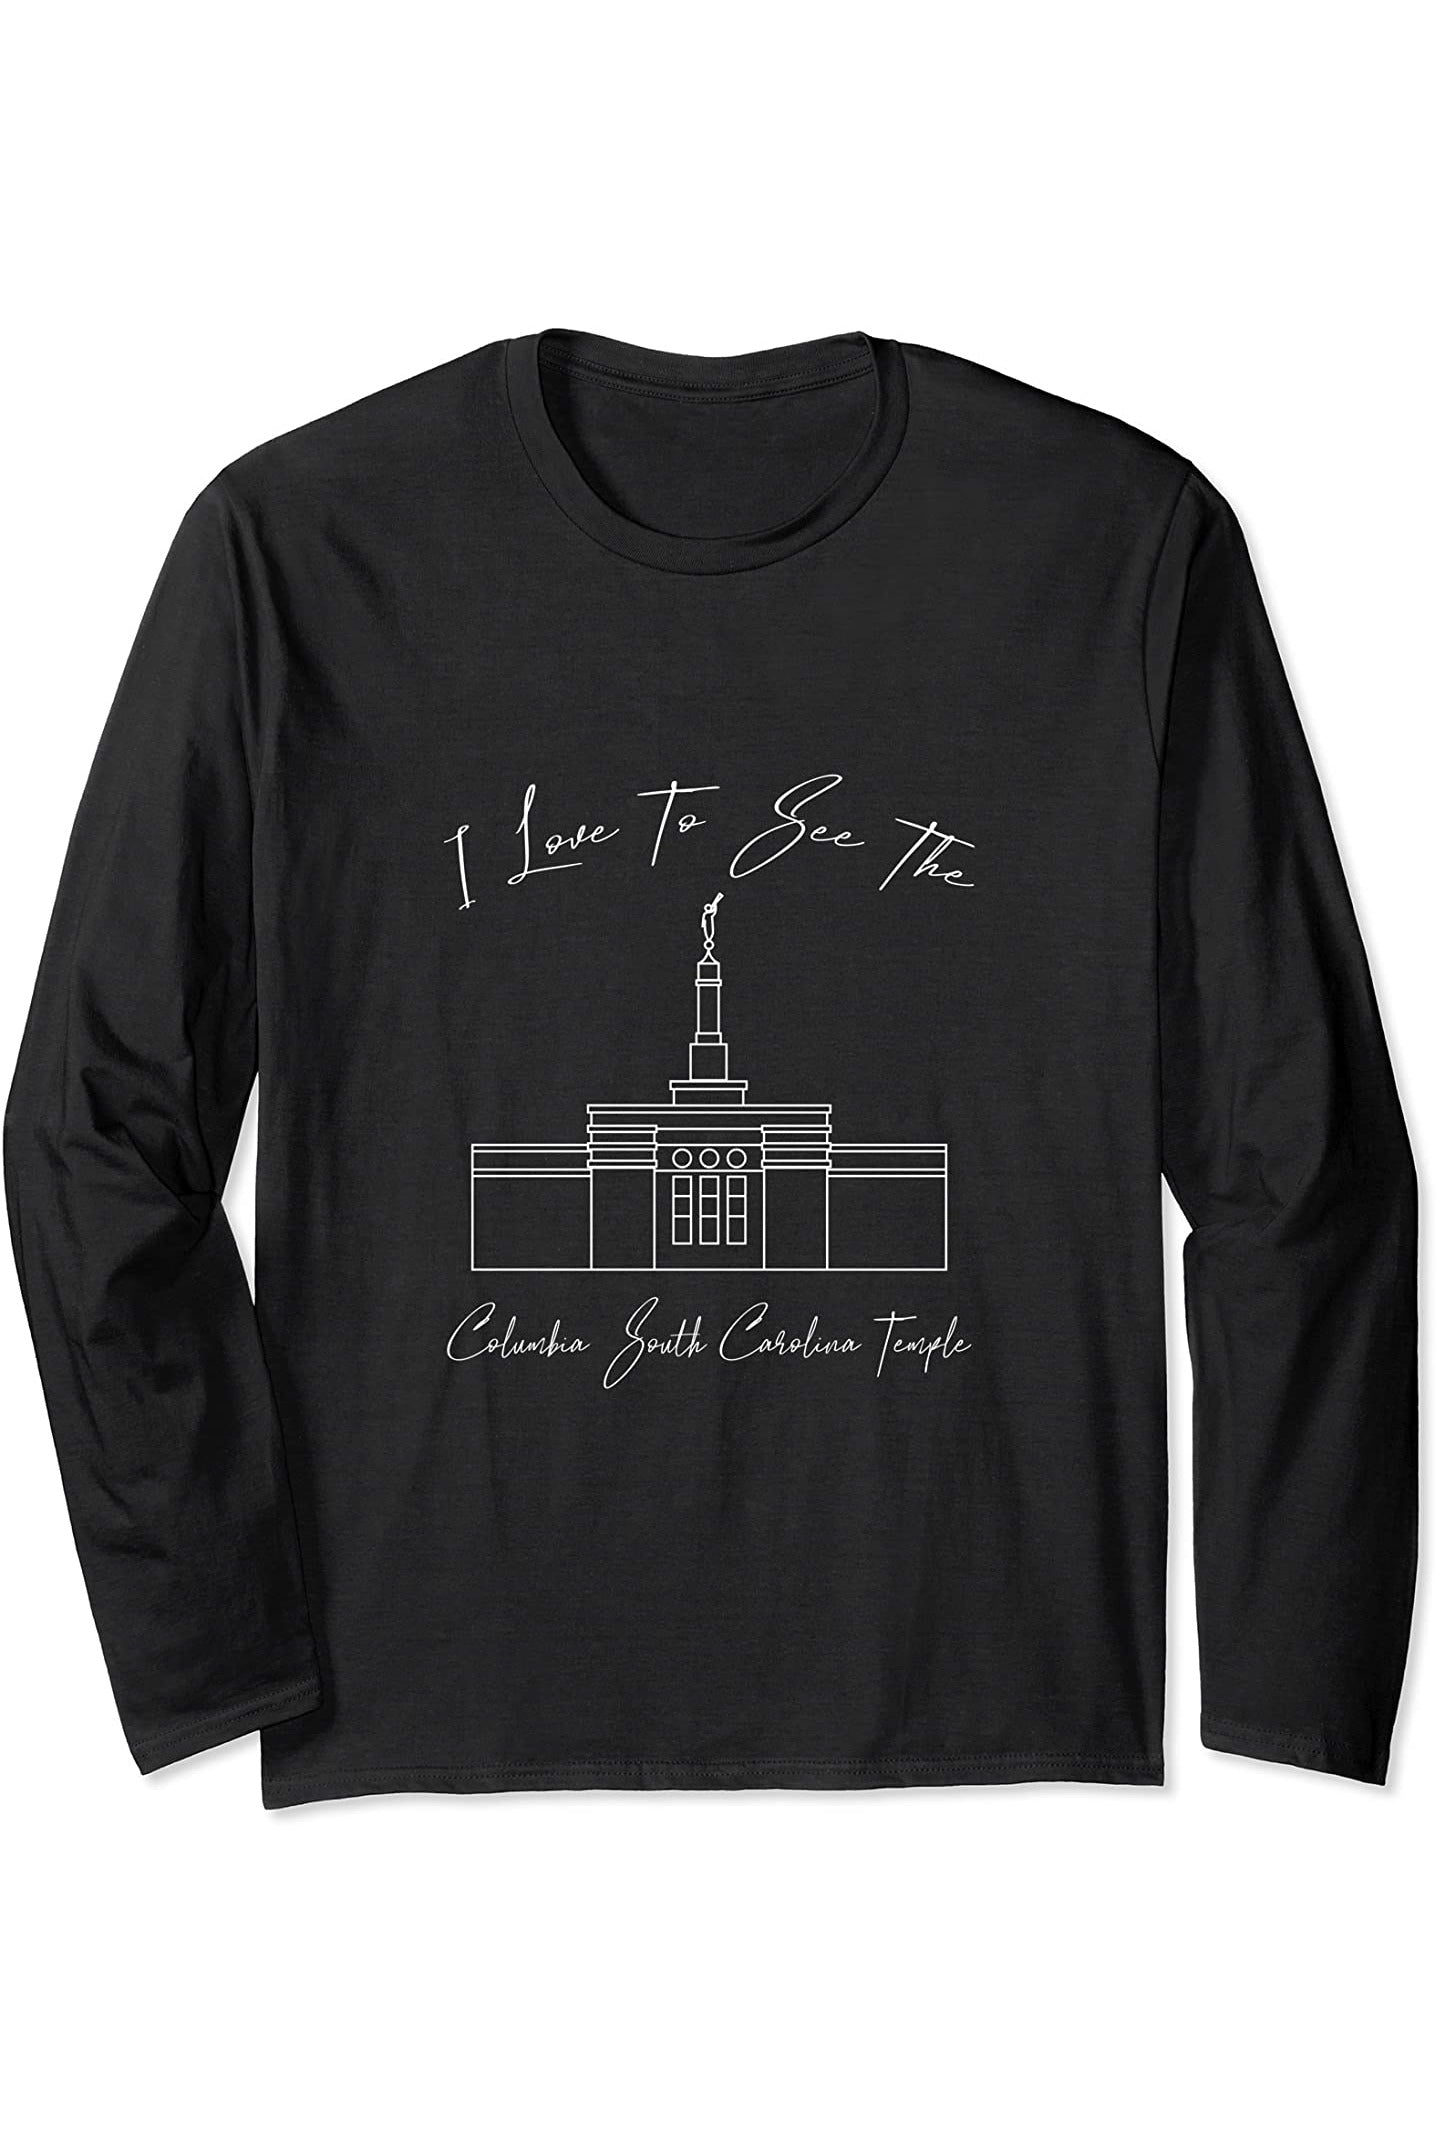 Columbia South Carolina Temple Long Sleeve T-Shirt - Calligraphy Style (English) US